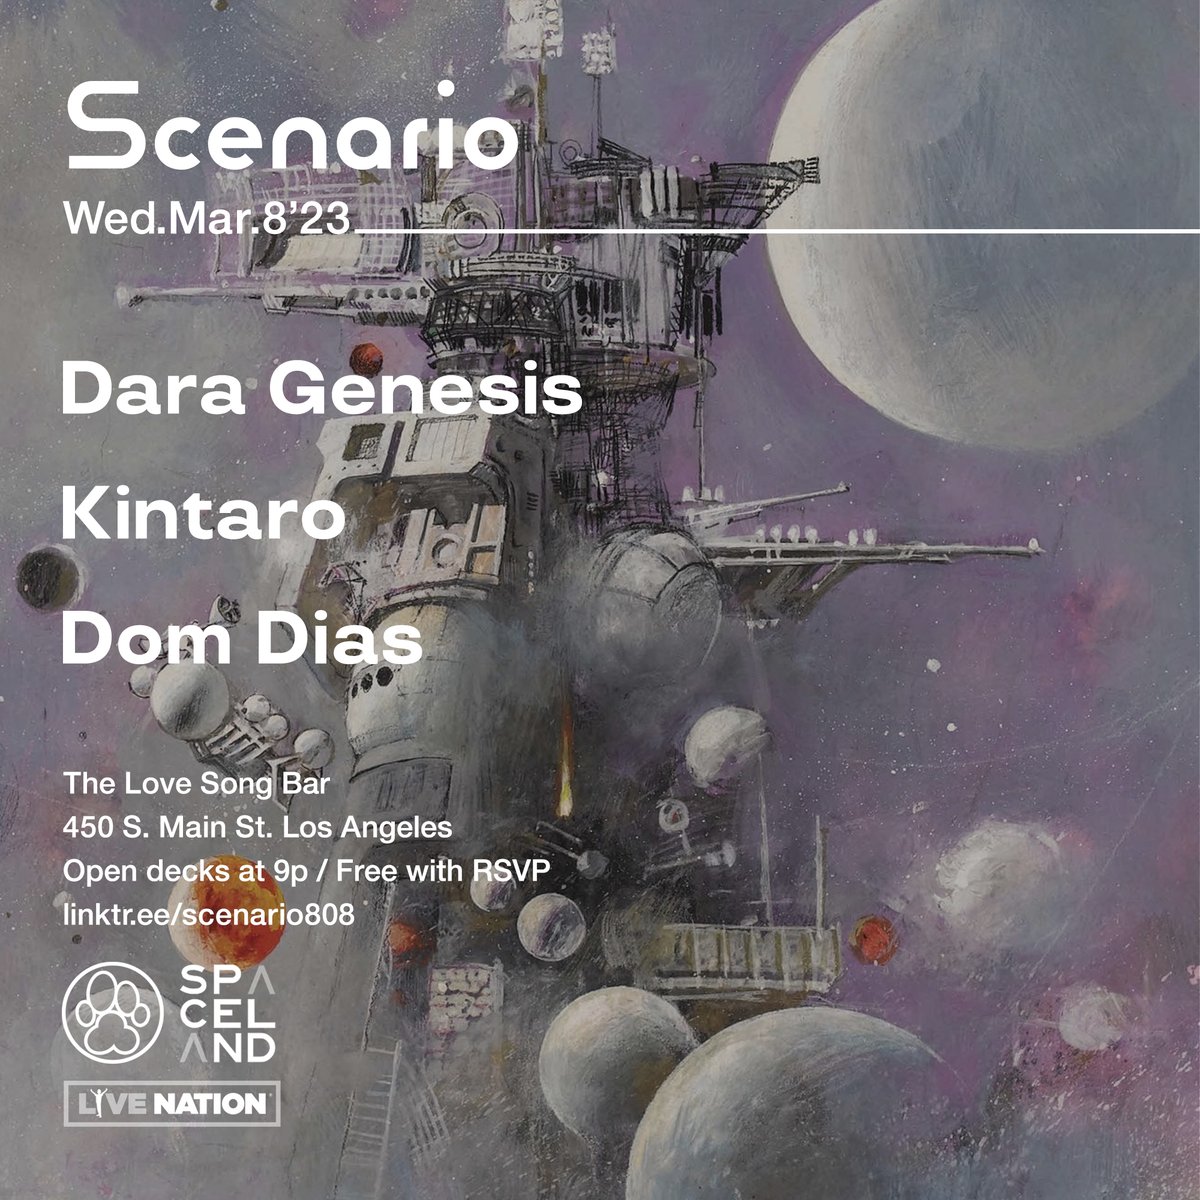 Tonight! @dara_genesis #Kintaro @prodbydomdias + @daddykev at @TheLoveSongBar. Open decks at 9p. Free with RSVP. Presented by @ALPHAPUP @SpacelandLA @LiveNation 🔊✨🔥 eventbrite.com/e/scenario-dar…